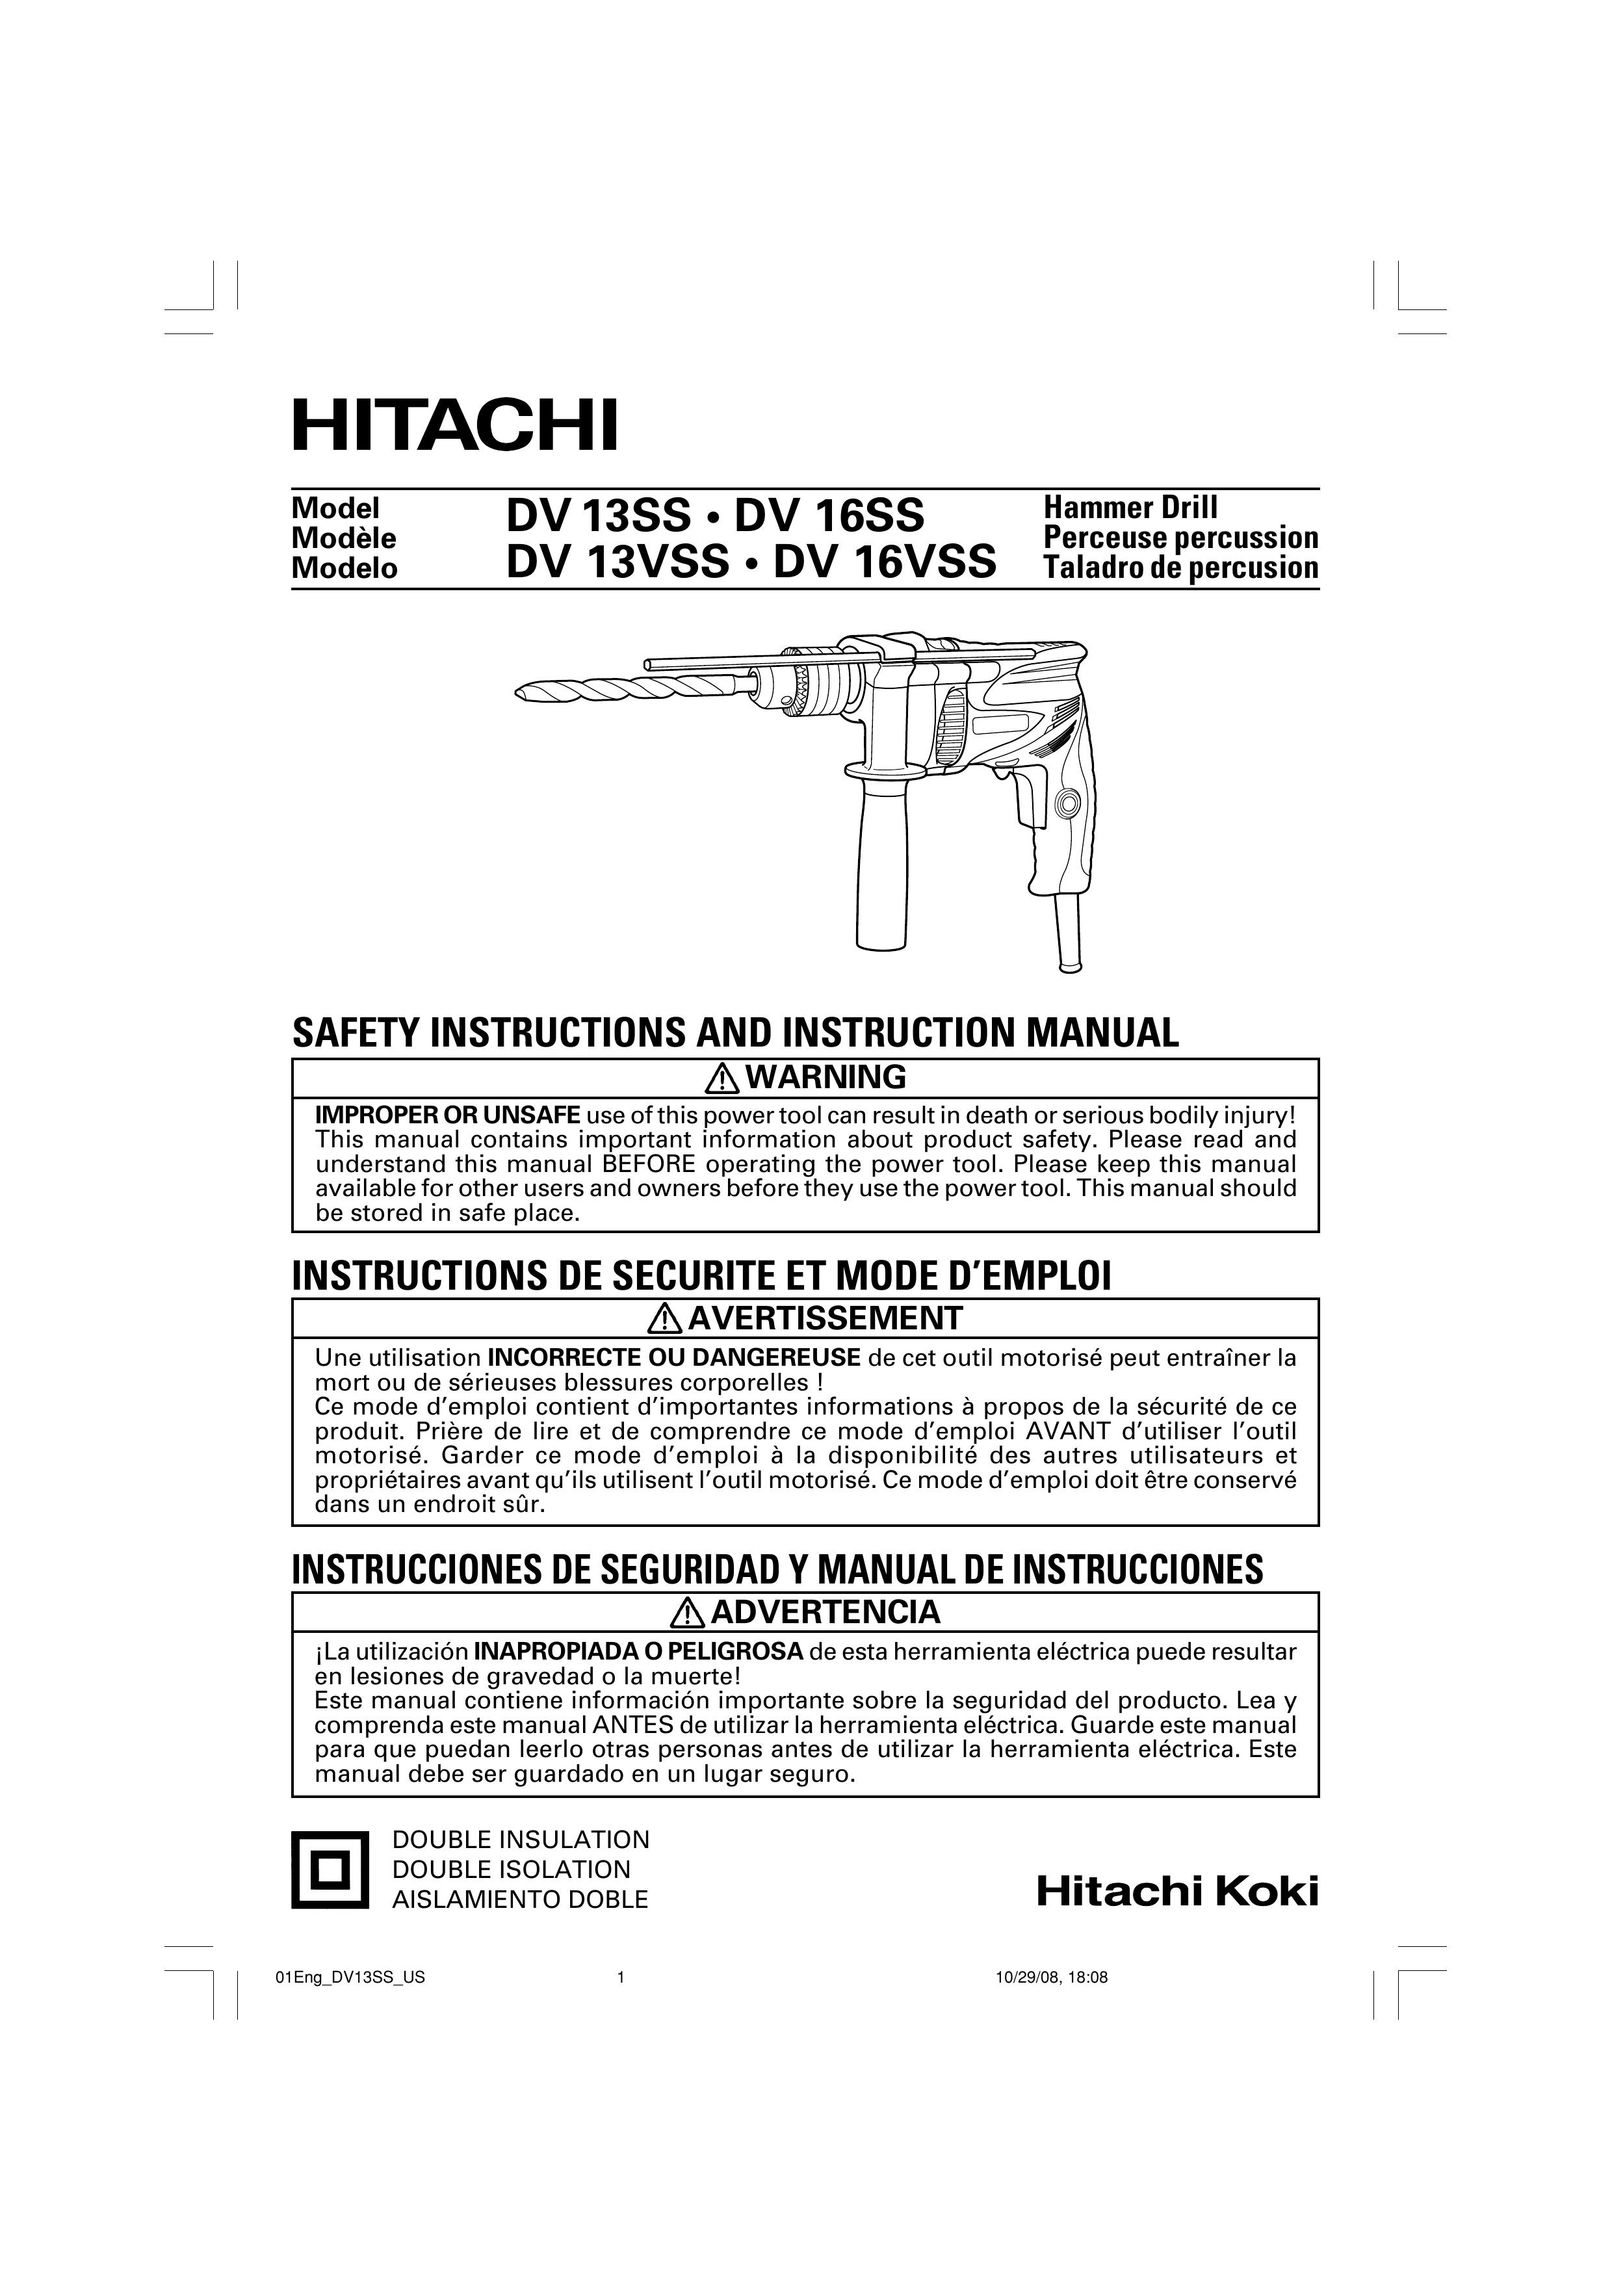 Hitachi DV 13VSS Cordless Drill User Manual